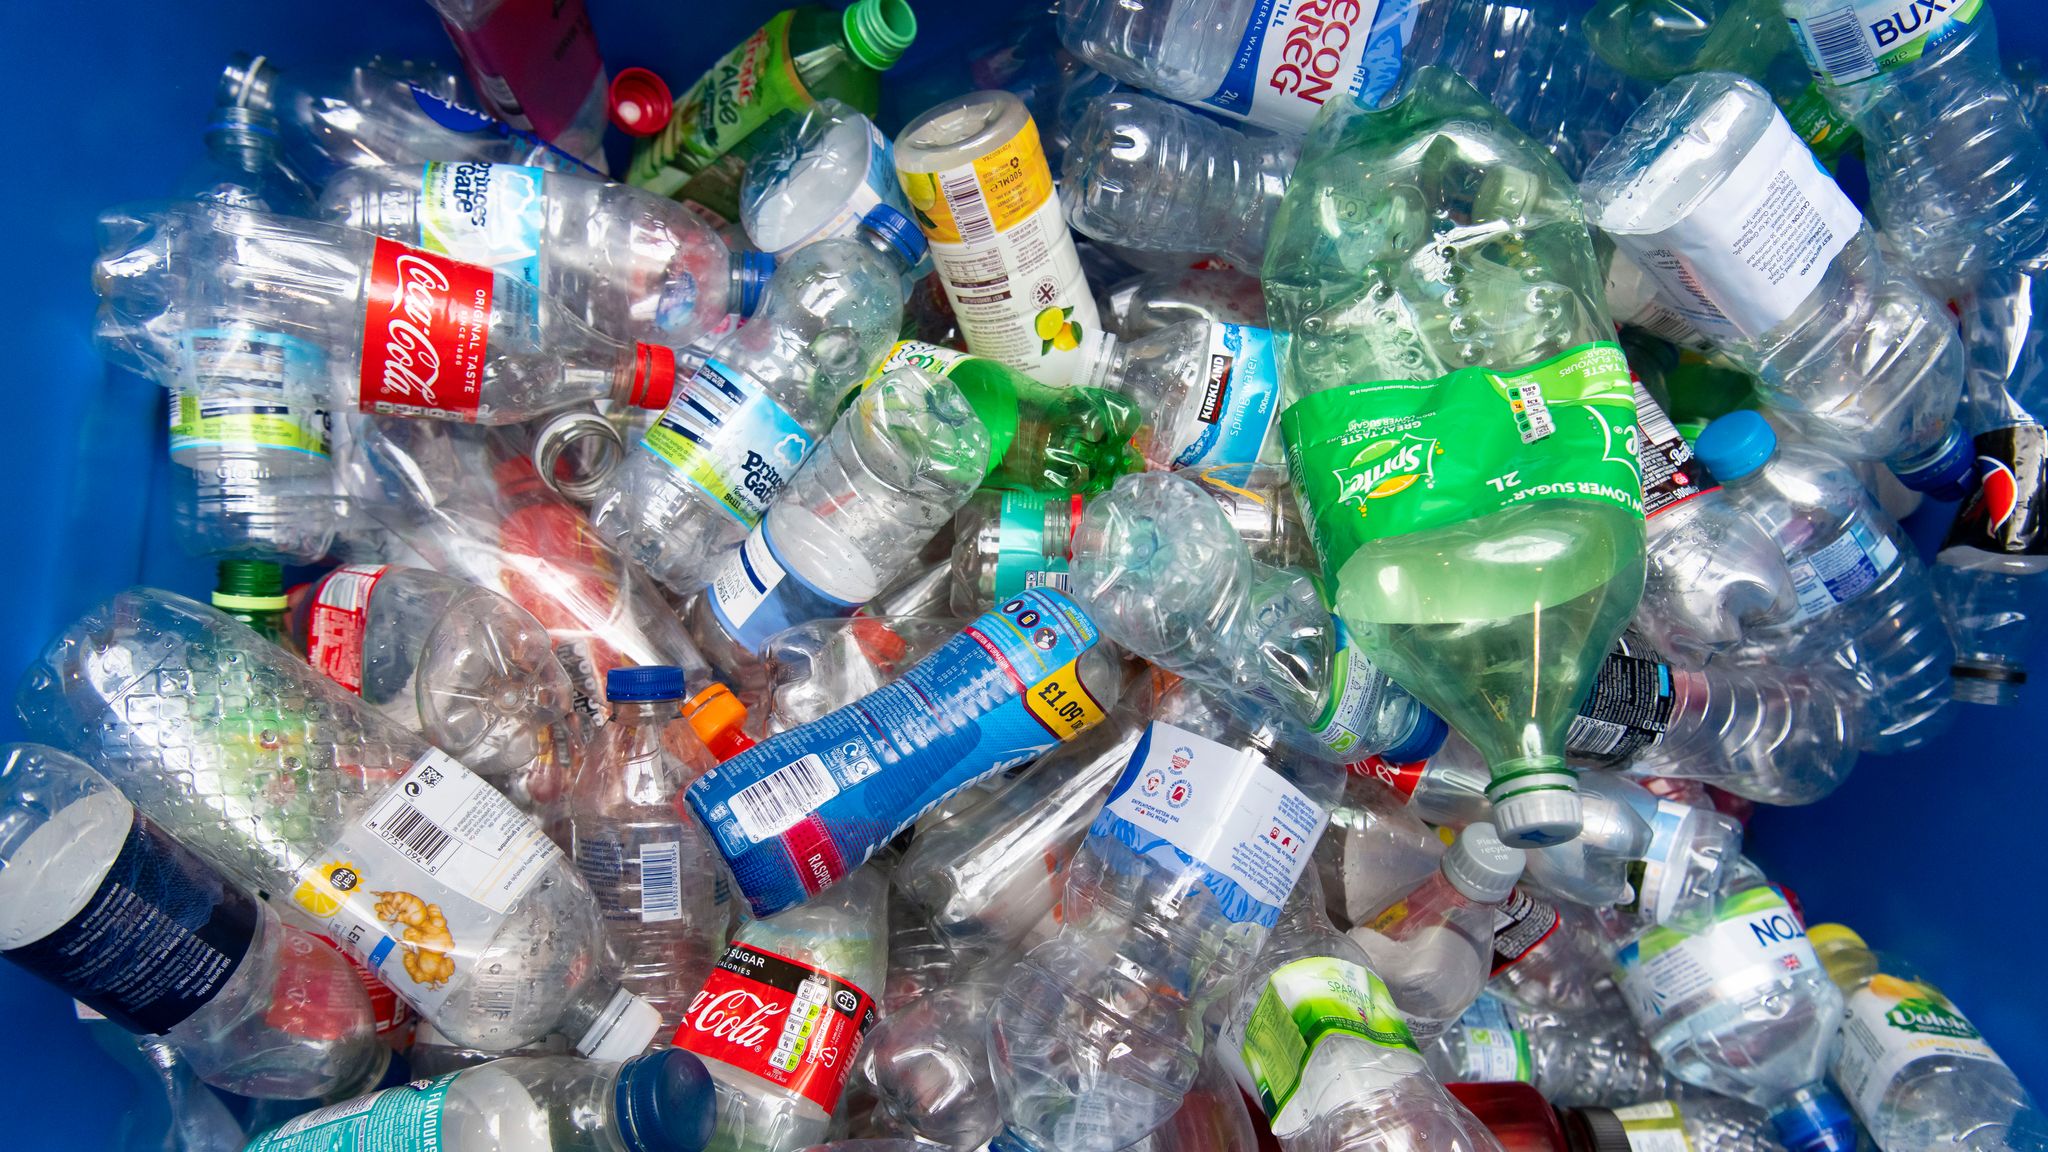 Household plastic waste increased during lockdown, survey suggests